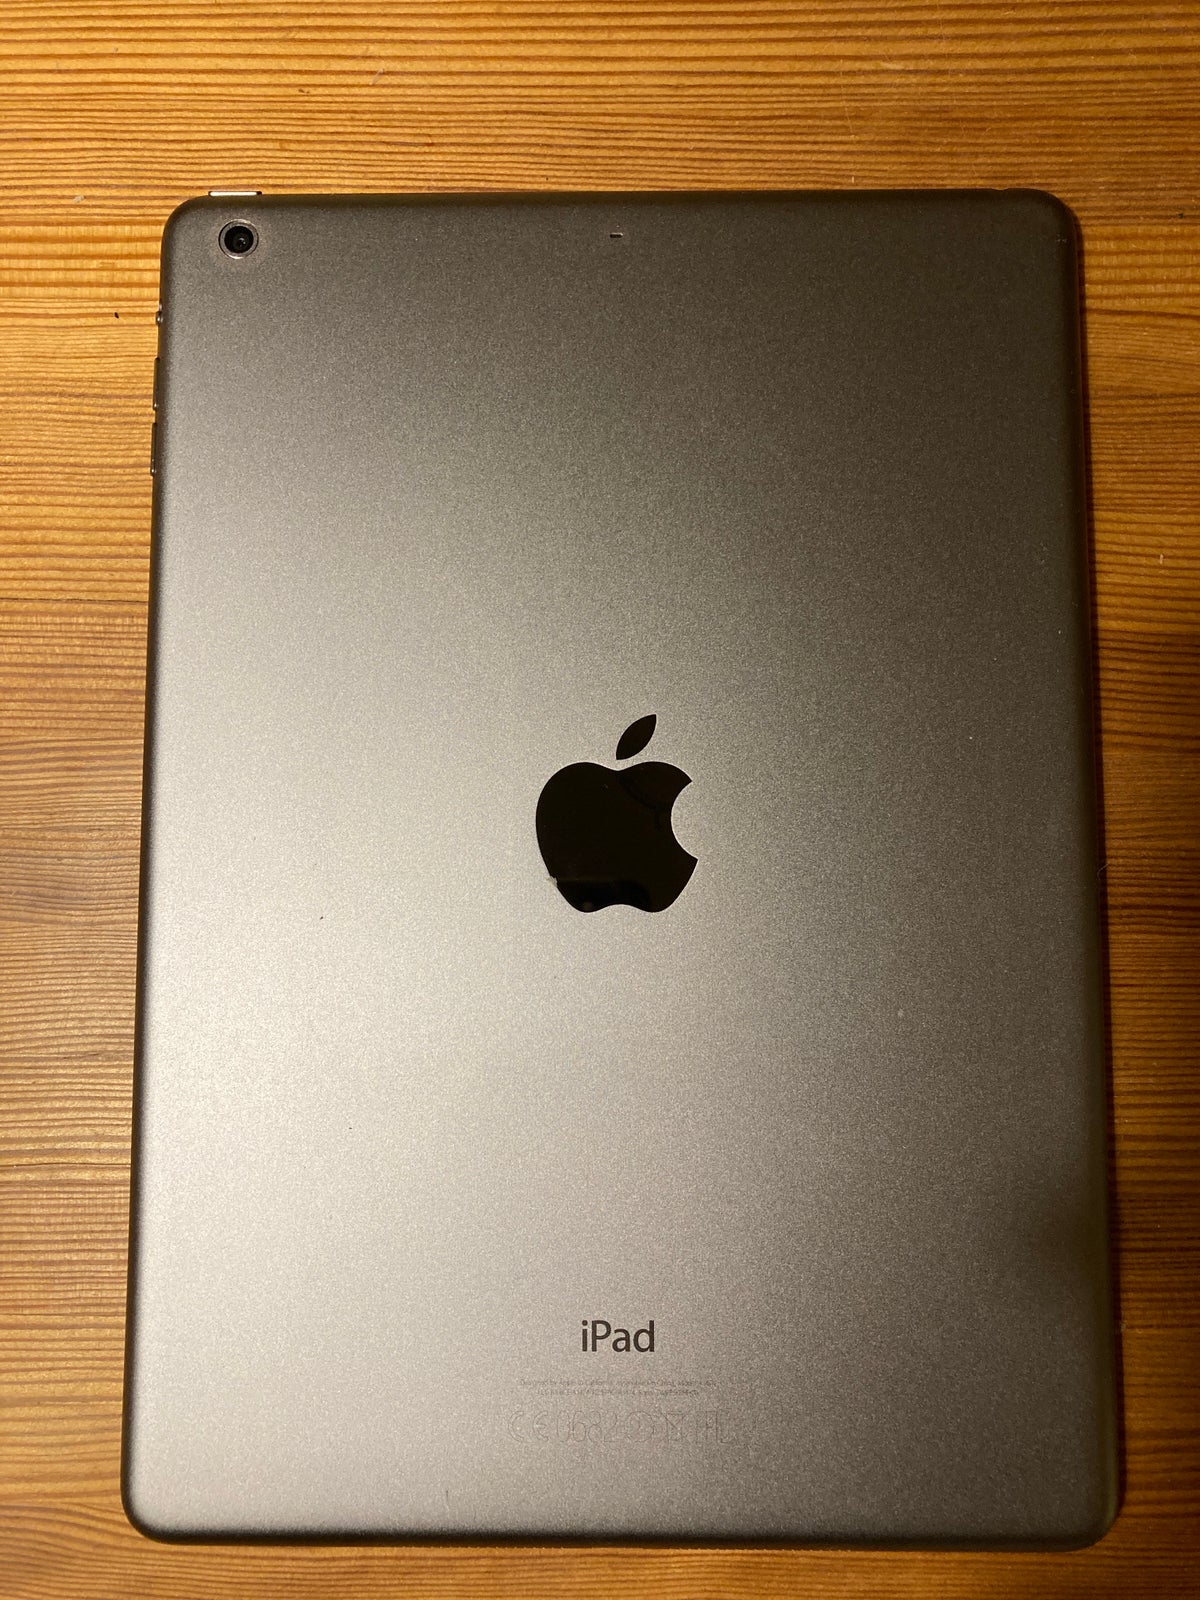 iPad Air, 16 GB, God